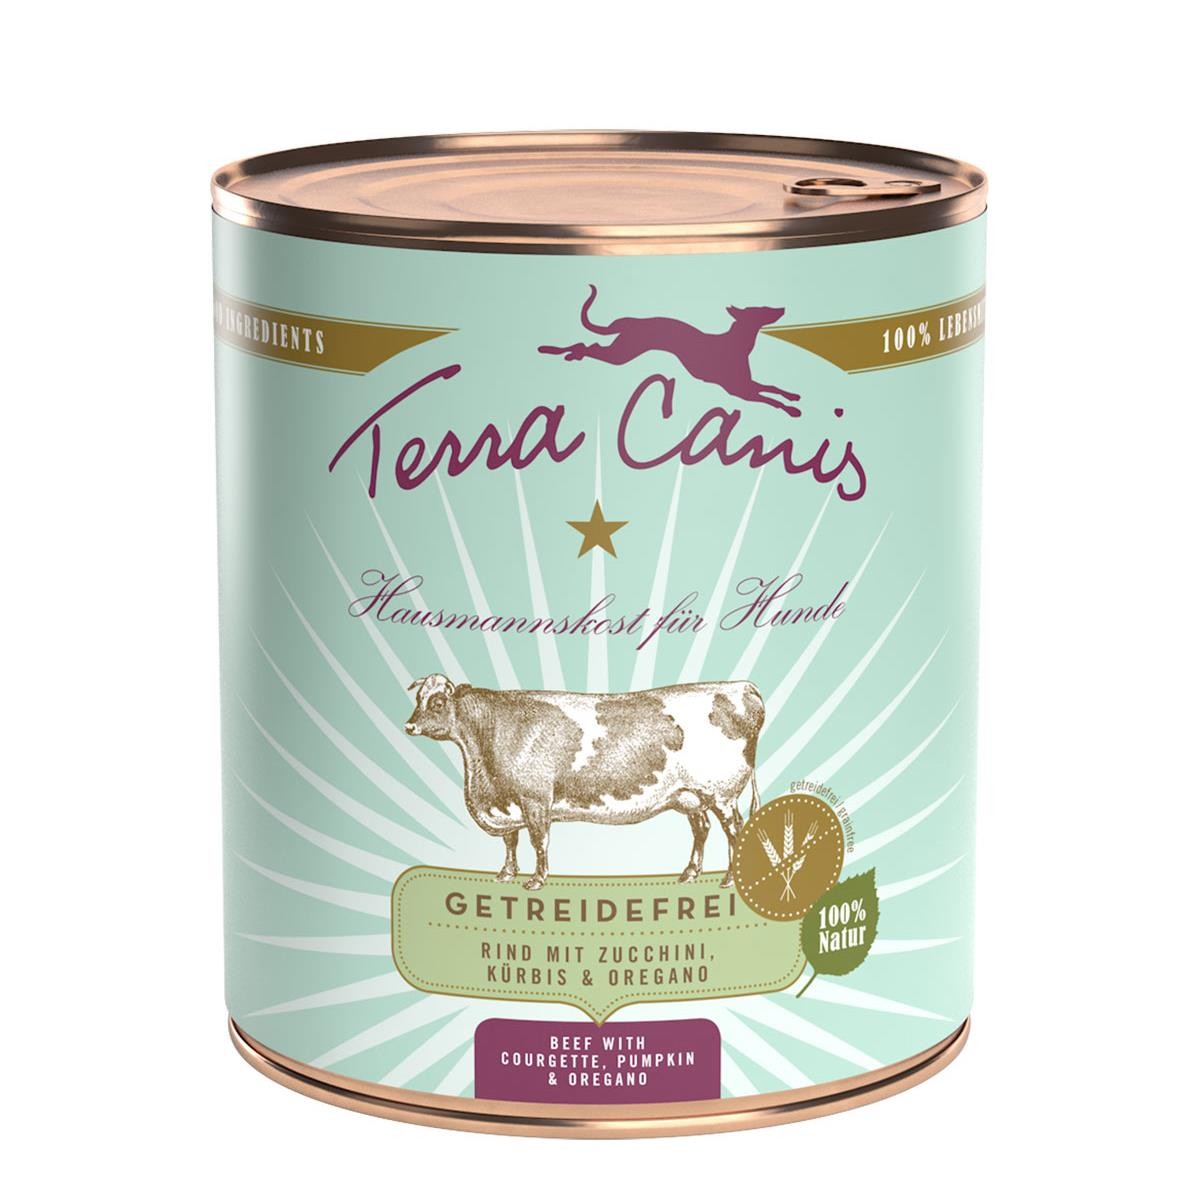 Terra Canis Sensitive Rind mit Zucchini 6 x 800g getreidefrei